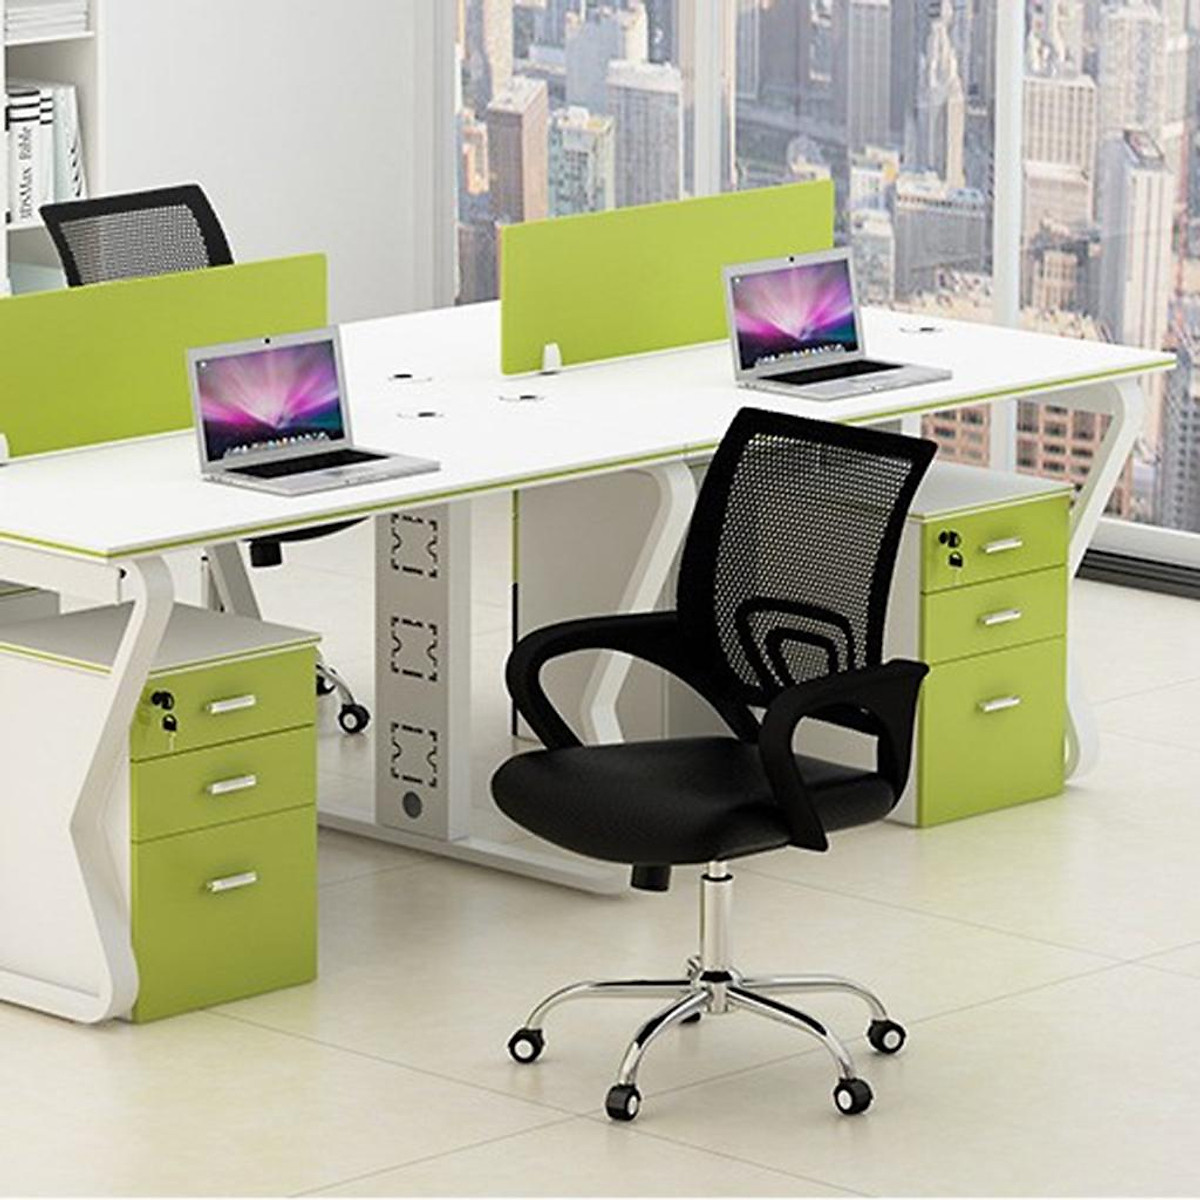 Universal Drawer Cam Lock Zinc Alloy Cabinet Office Cupboard Desk Locks  With 2 Keys For Furniture